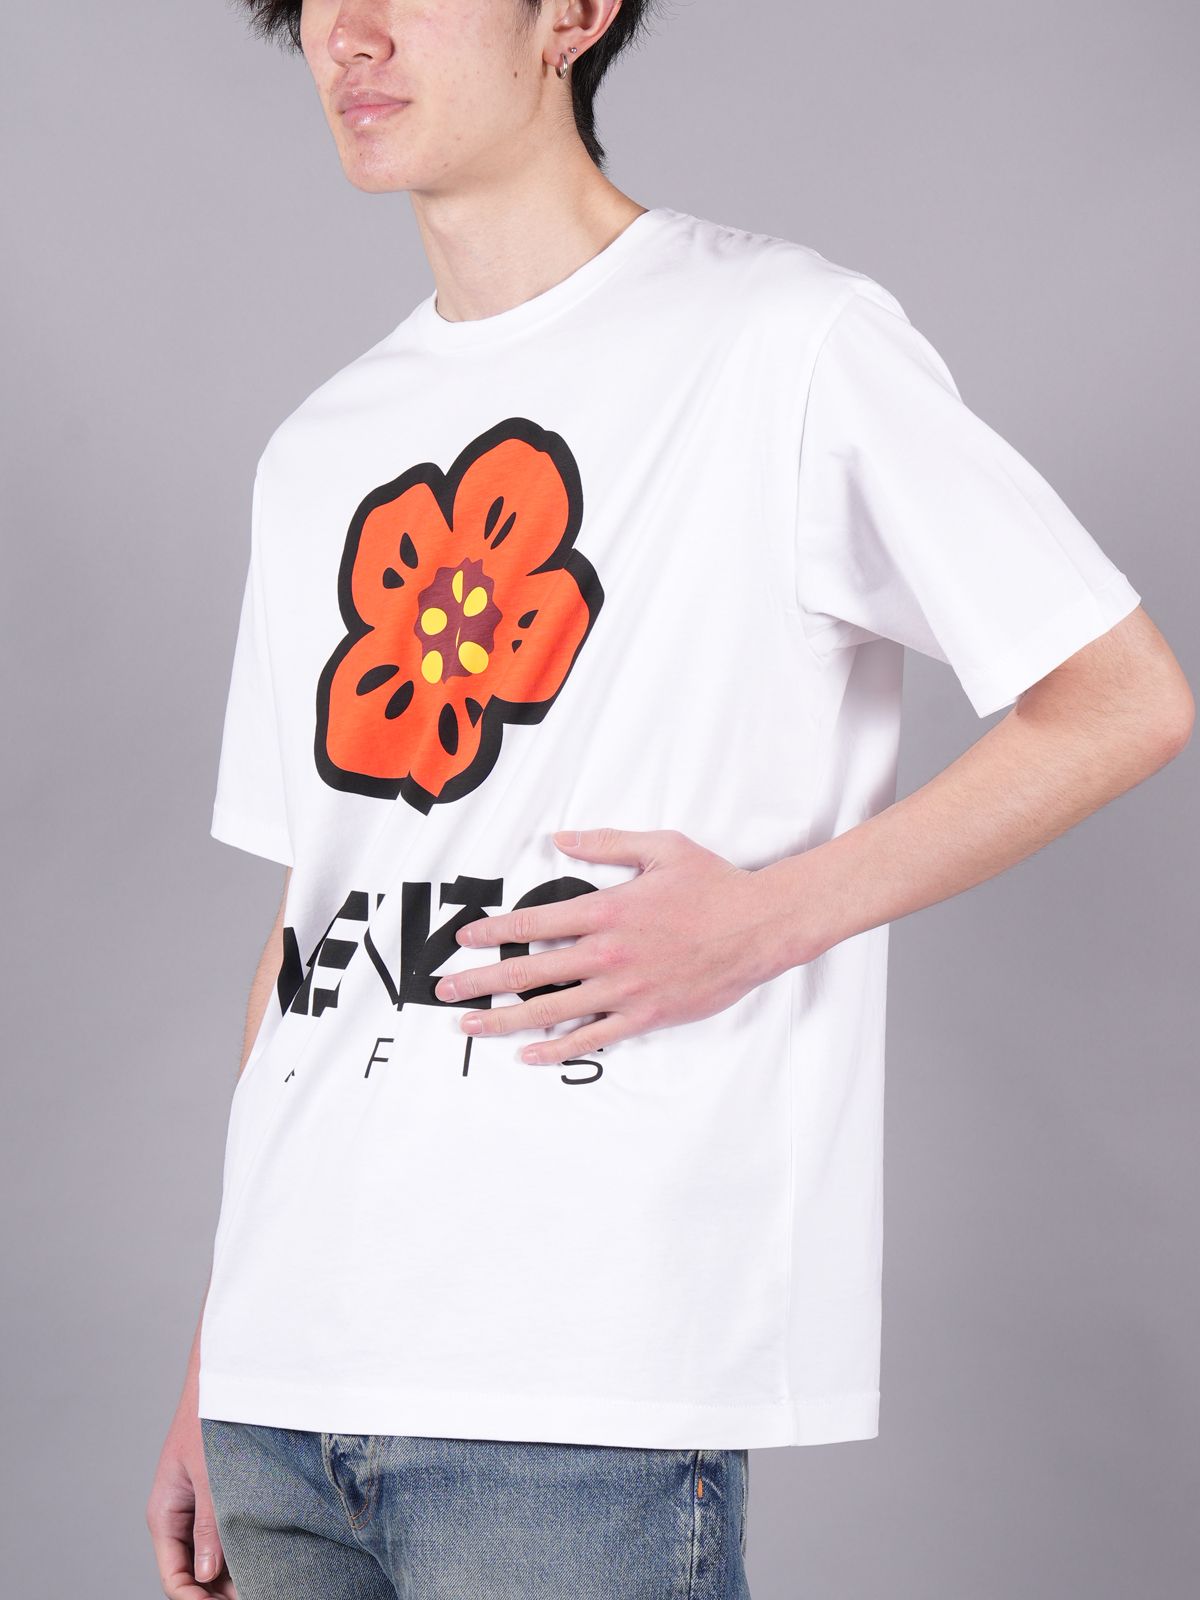 KENZO - 【ラスト1点】 Boke Flower Tee / ボケフラワー Tシャツ